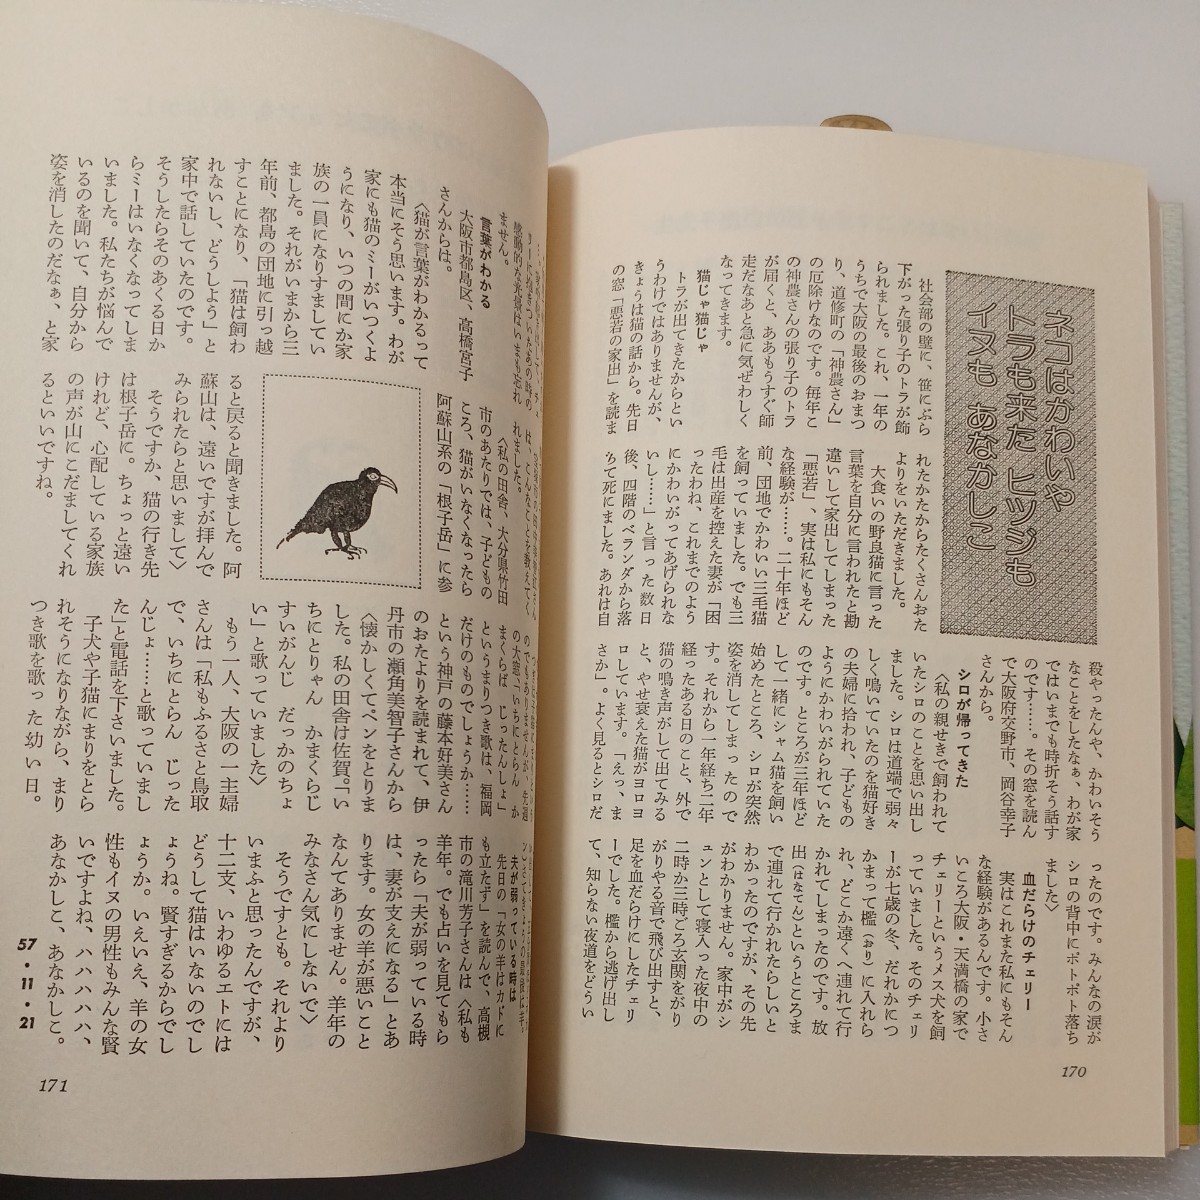 zaa-520♪記者の窓から 1982・2・7・1―12・31 読売新聞大阪社会部(編) (1983/5/15)